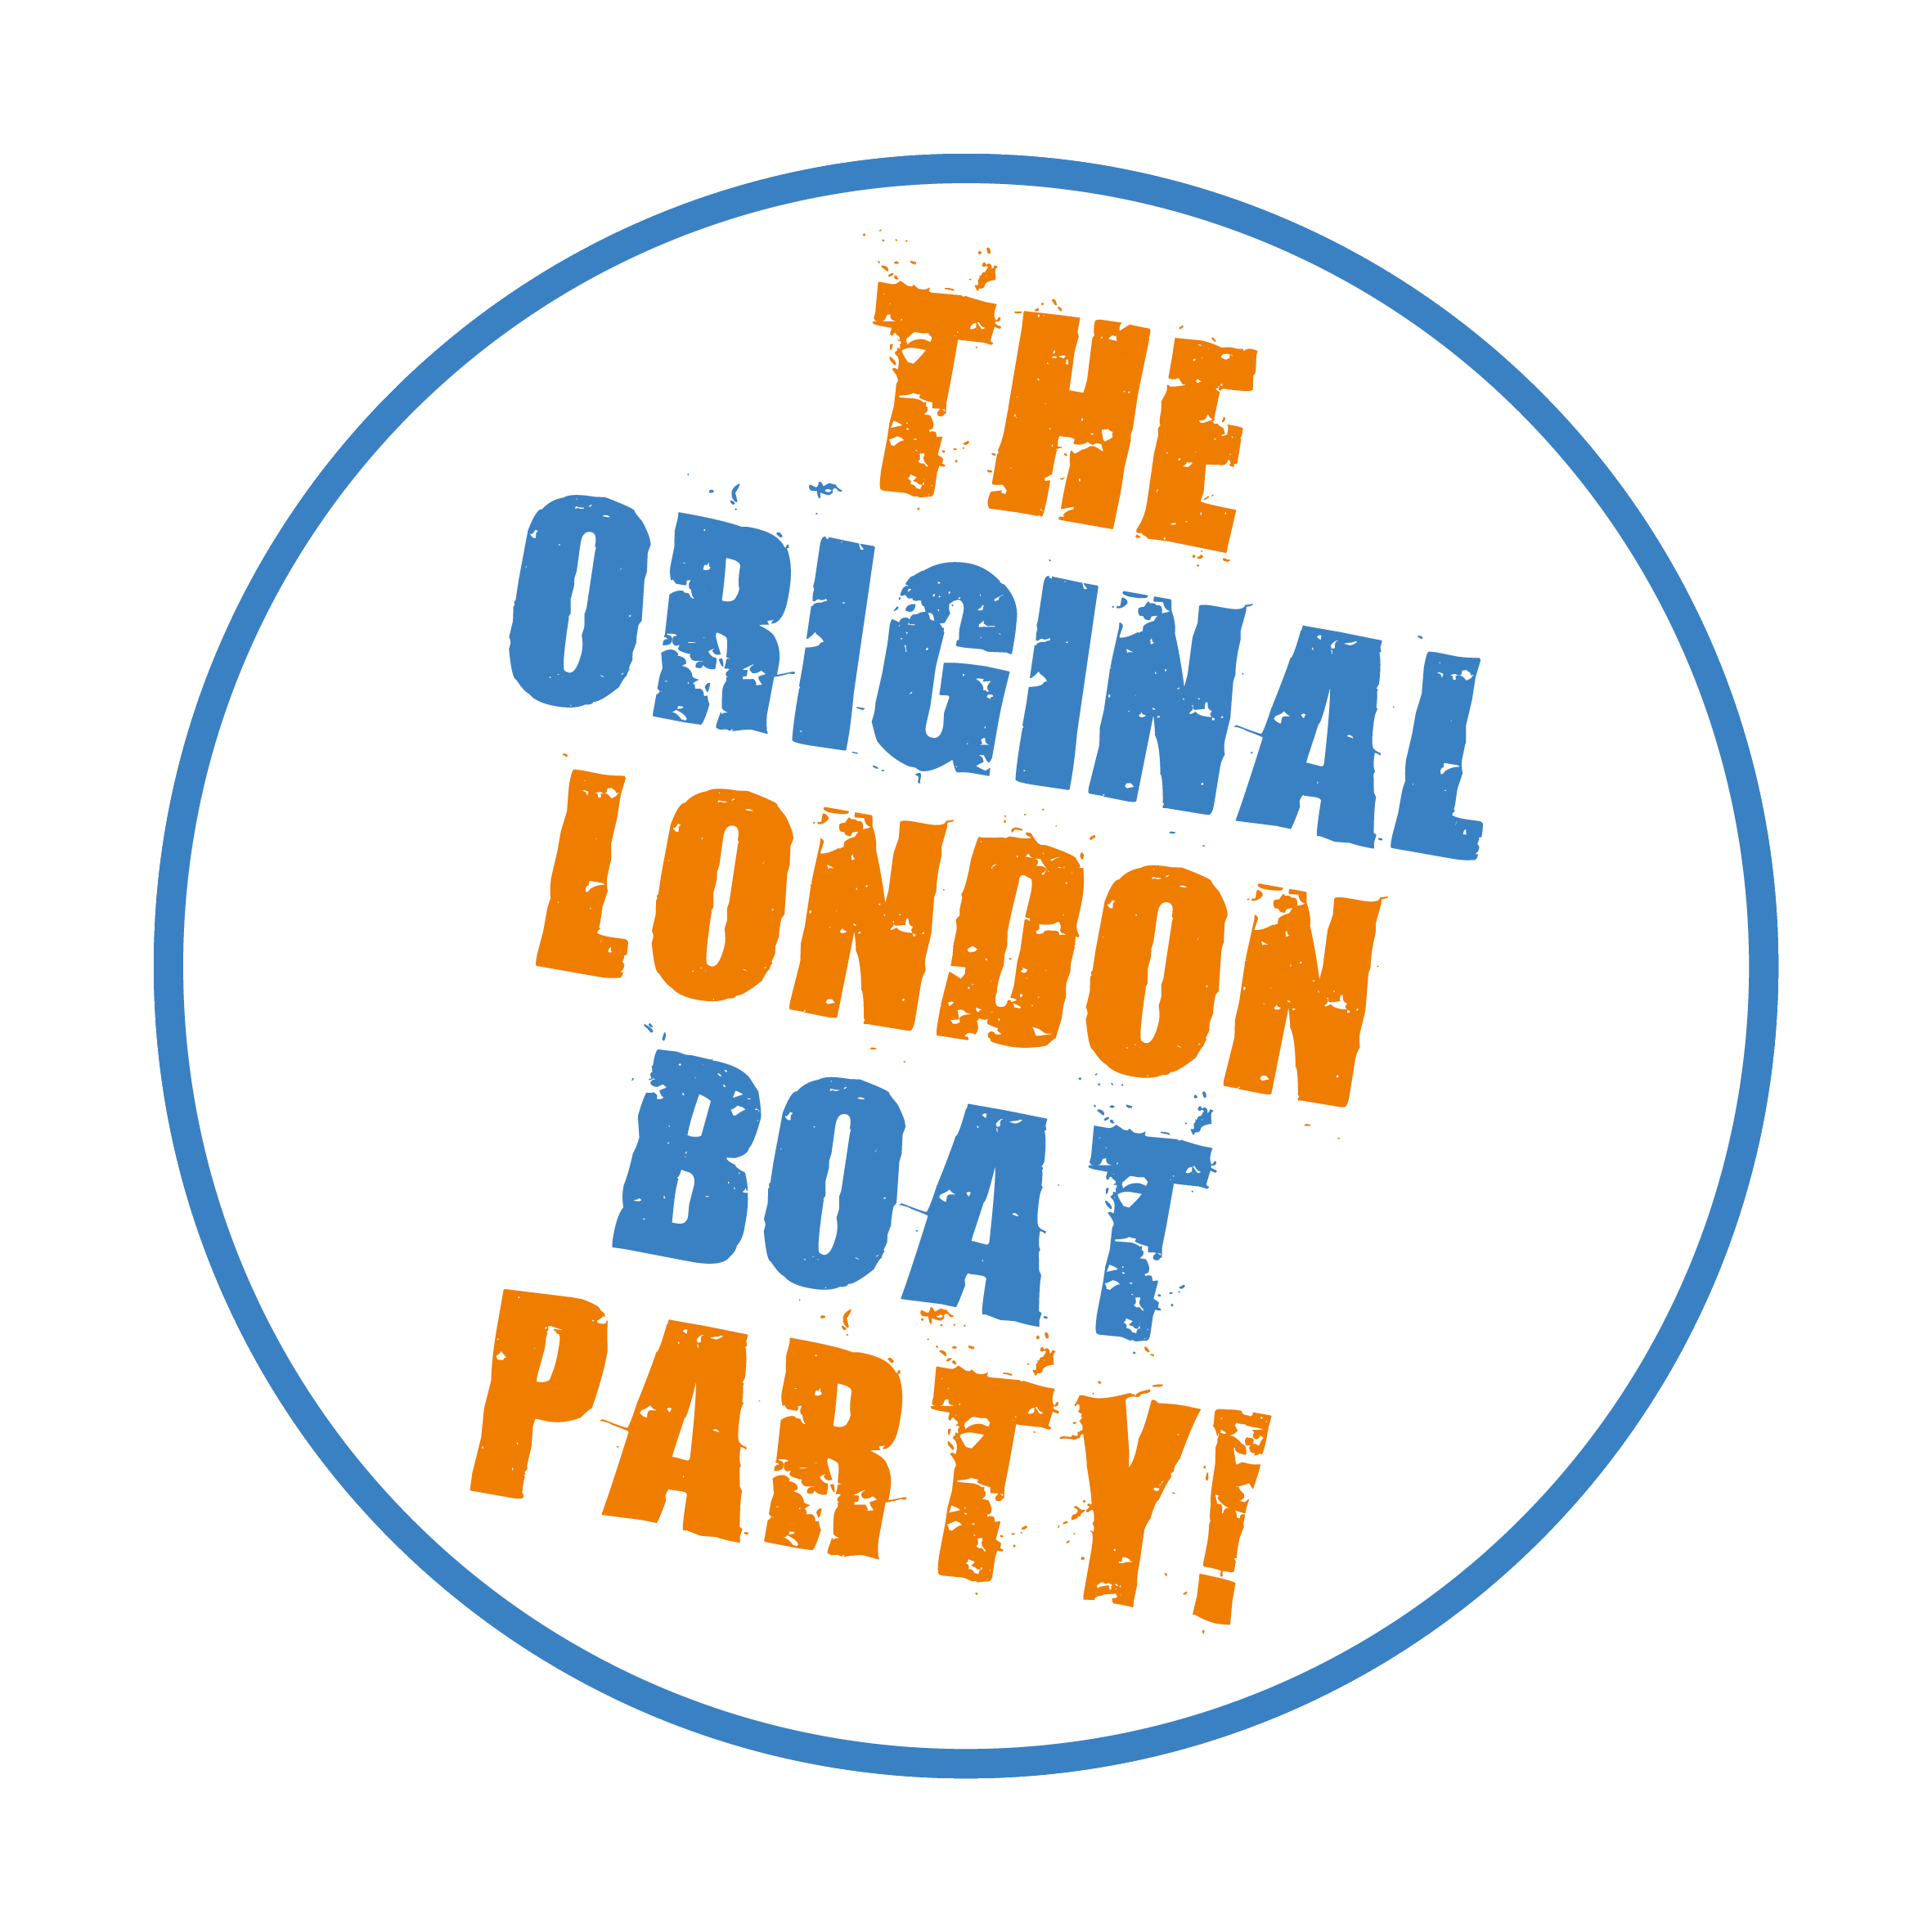 London boat party logo